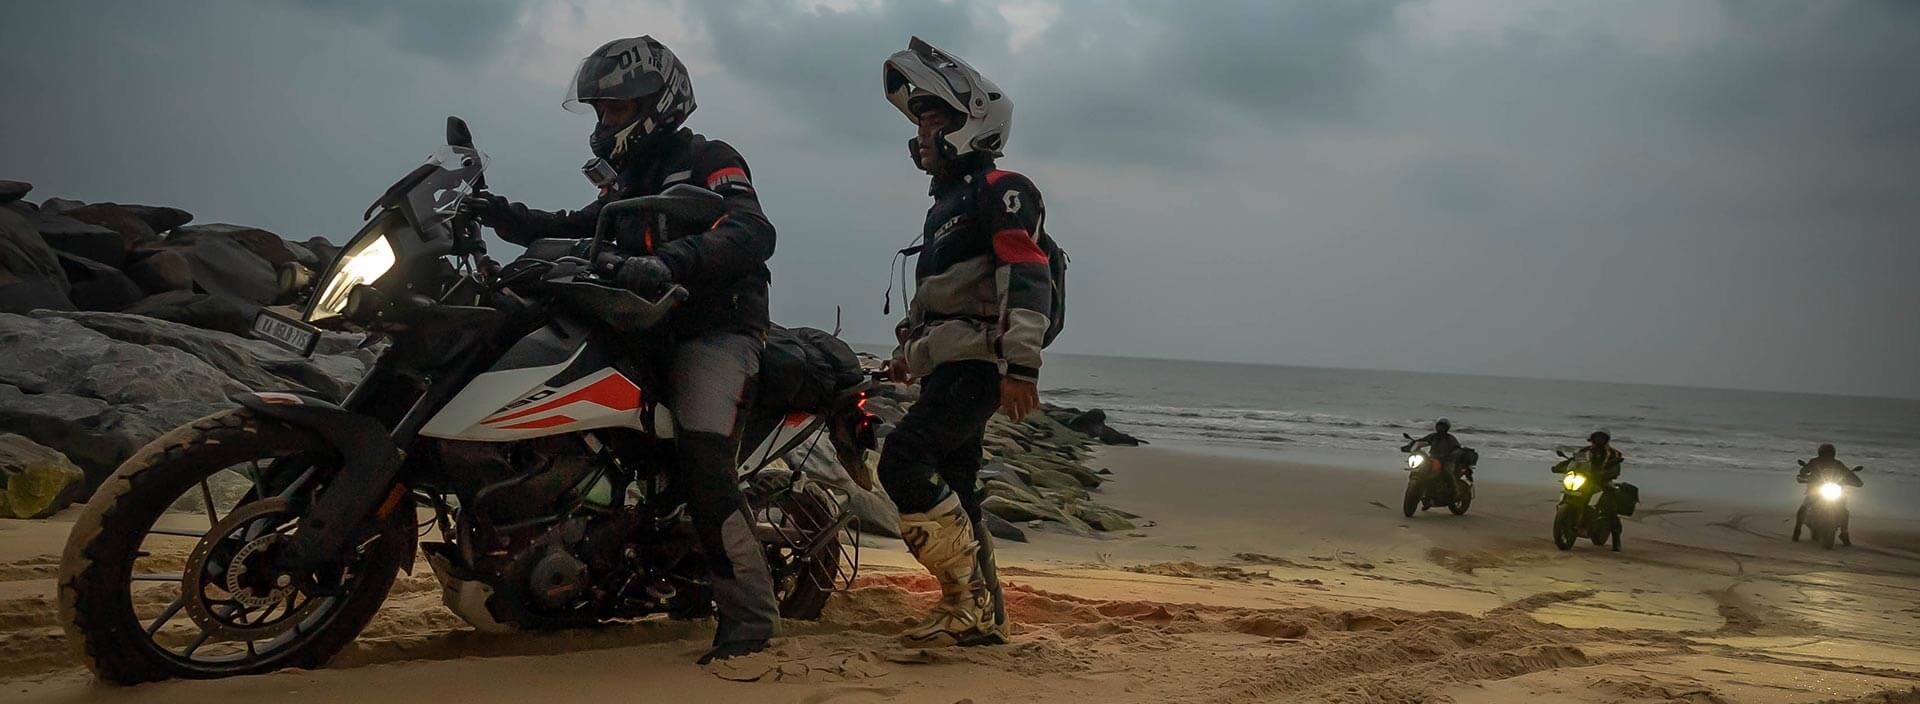 Nilesh Dhumal KTM Adventure 390 expert goa beach ride